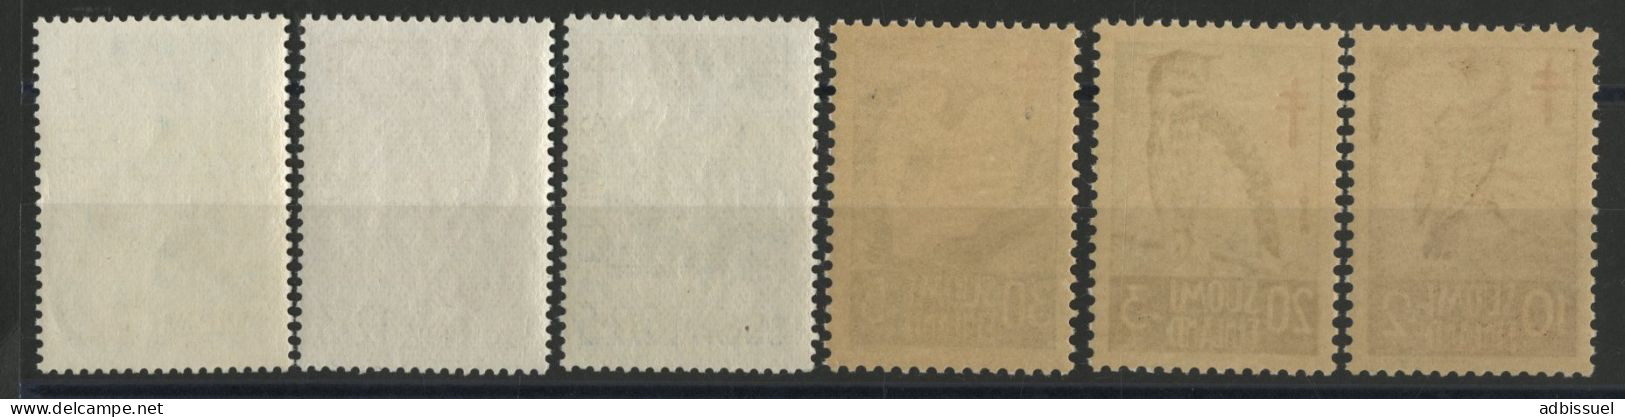 SUOMI FINLAND N° 379 à 381 + 396 à 398 Cote 25,50 € Neufs ** (MNH) OISEAUX BIRDS TB - Unused Stamps